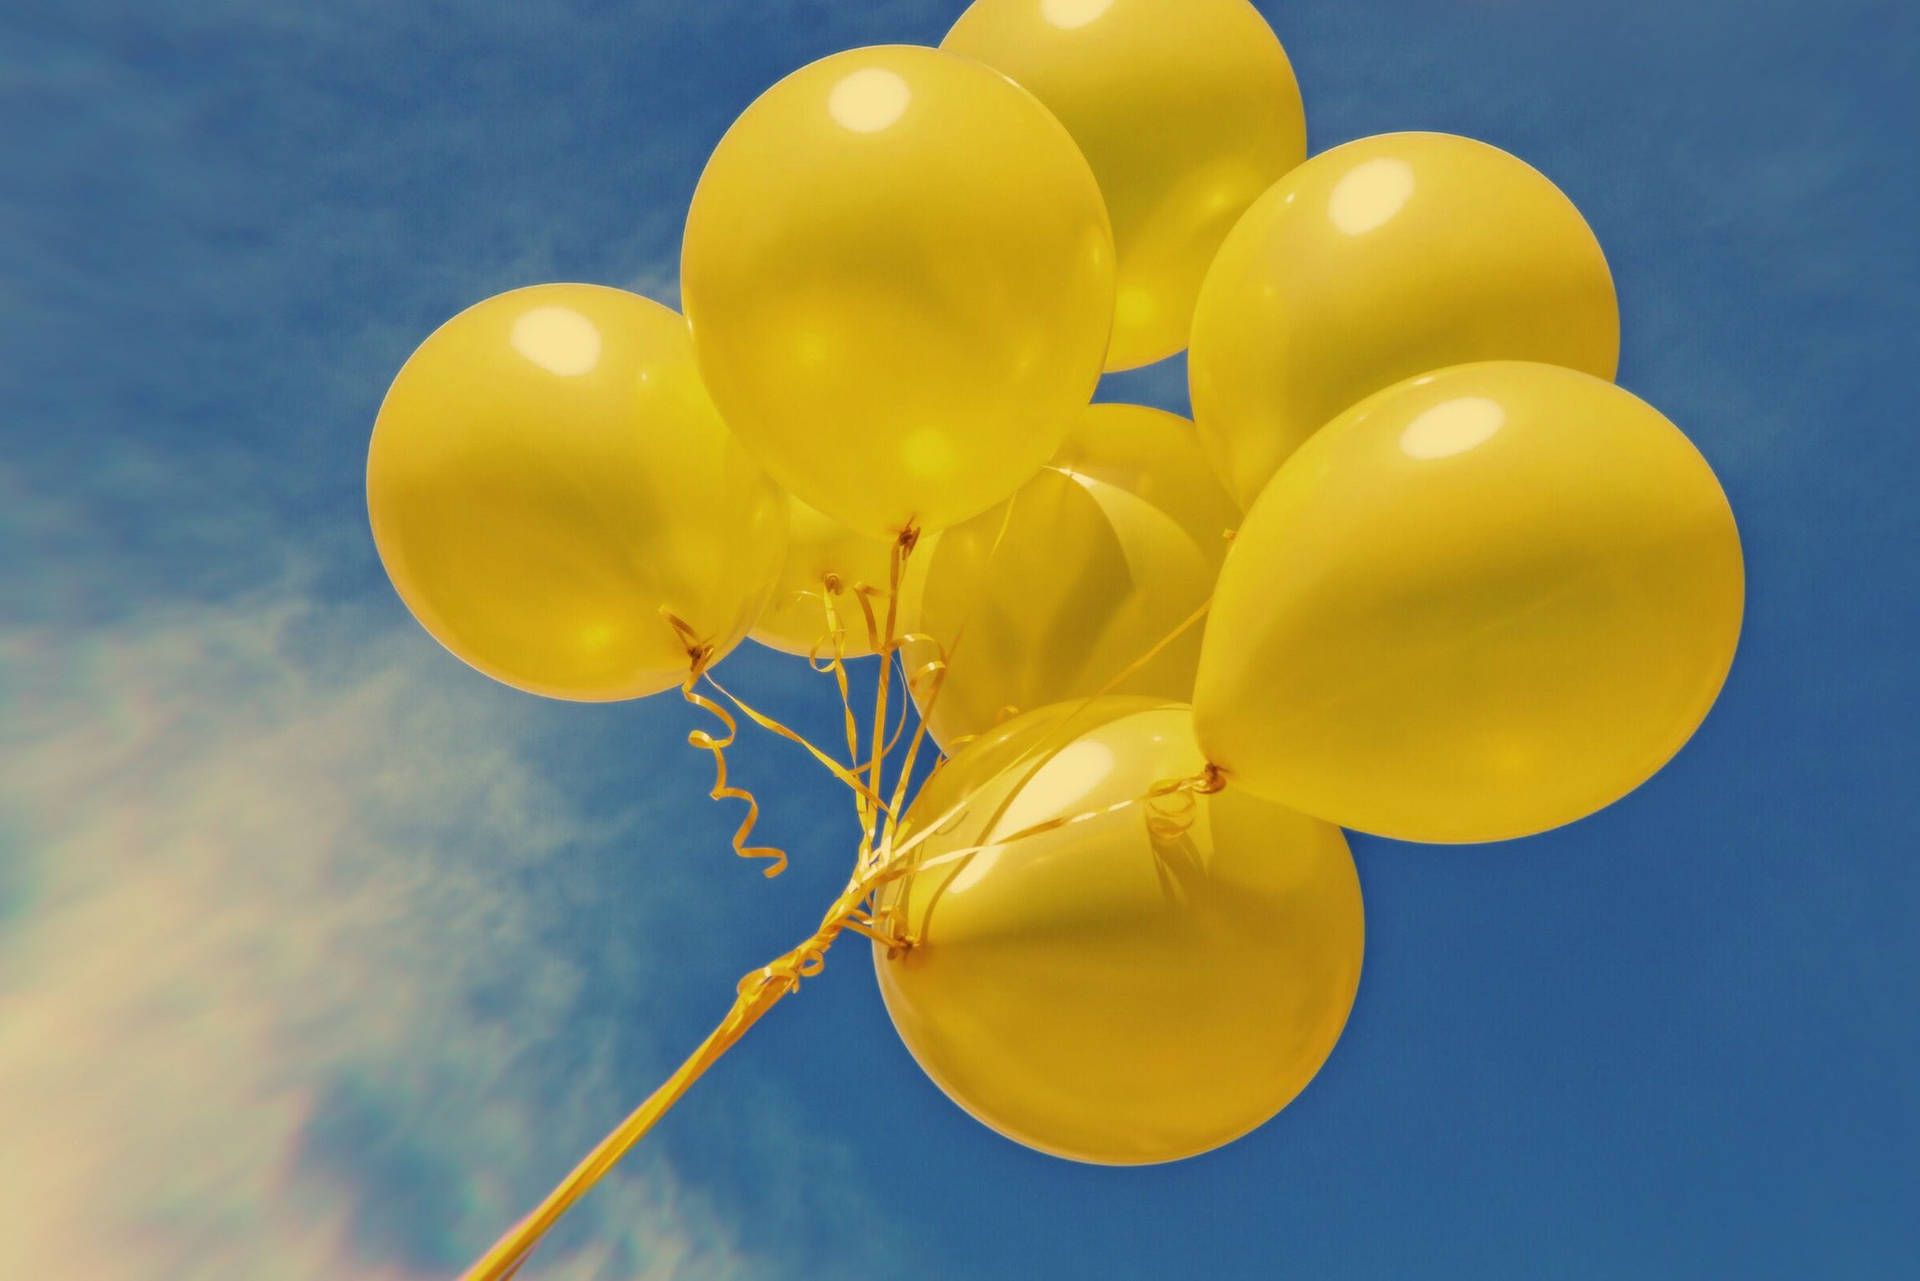  Luftballons Hintergrundbild 1920x1281. Download Flying Neon Yellow Balloons Wallpaper